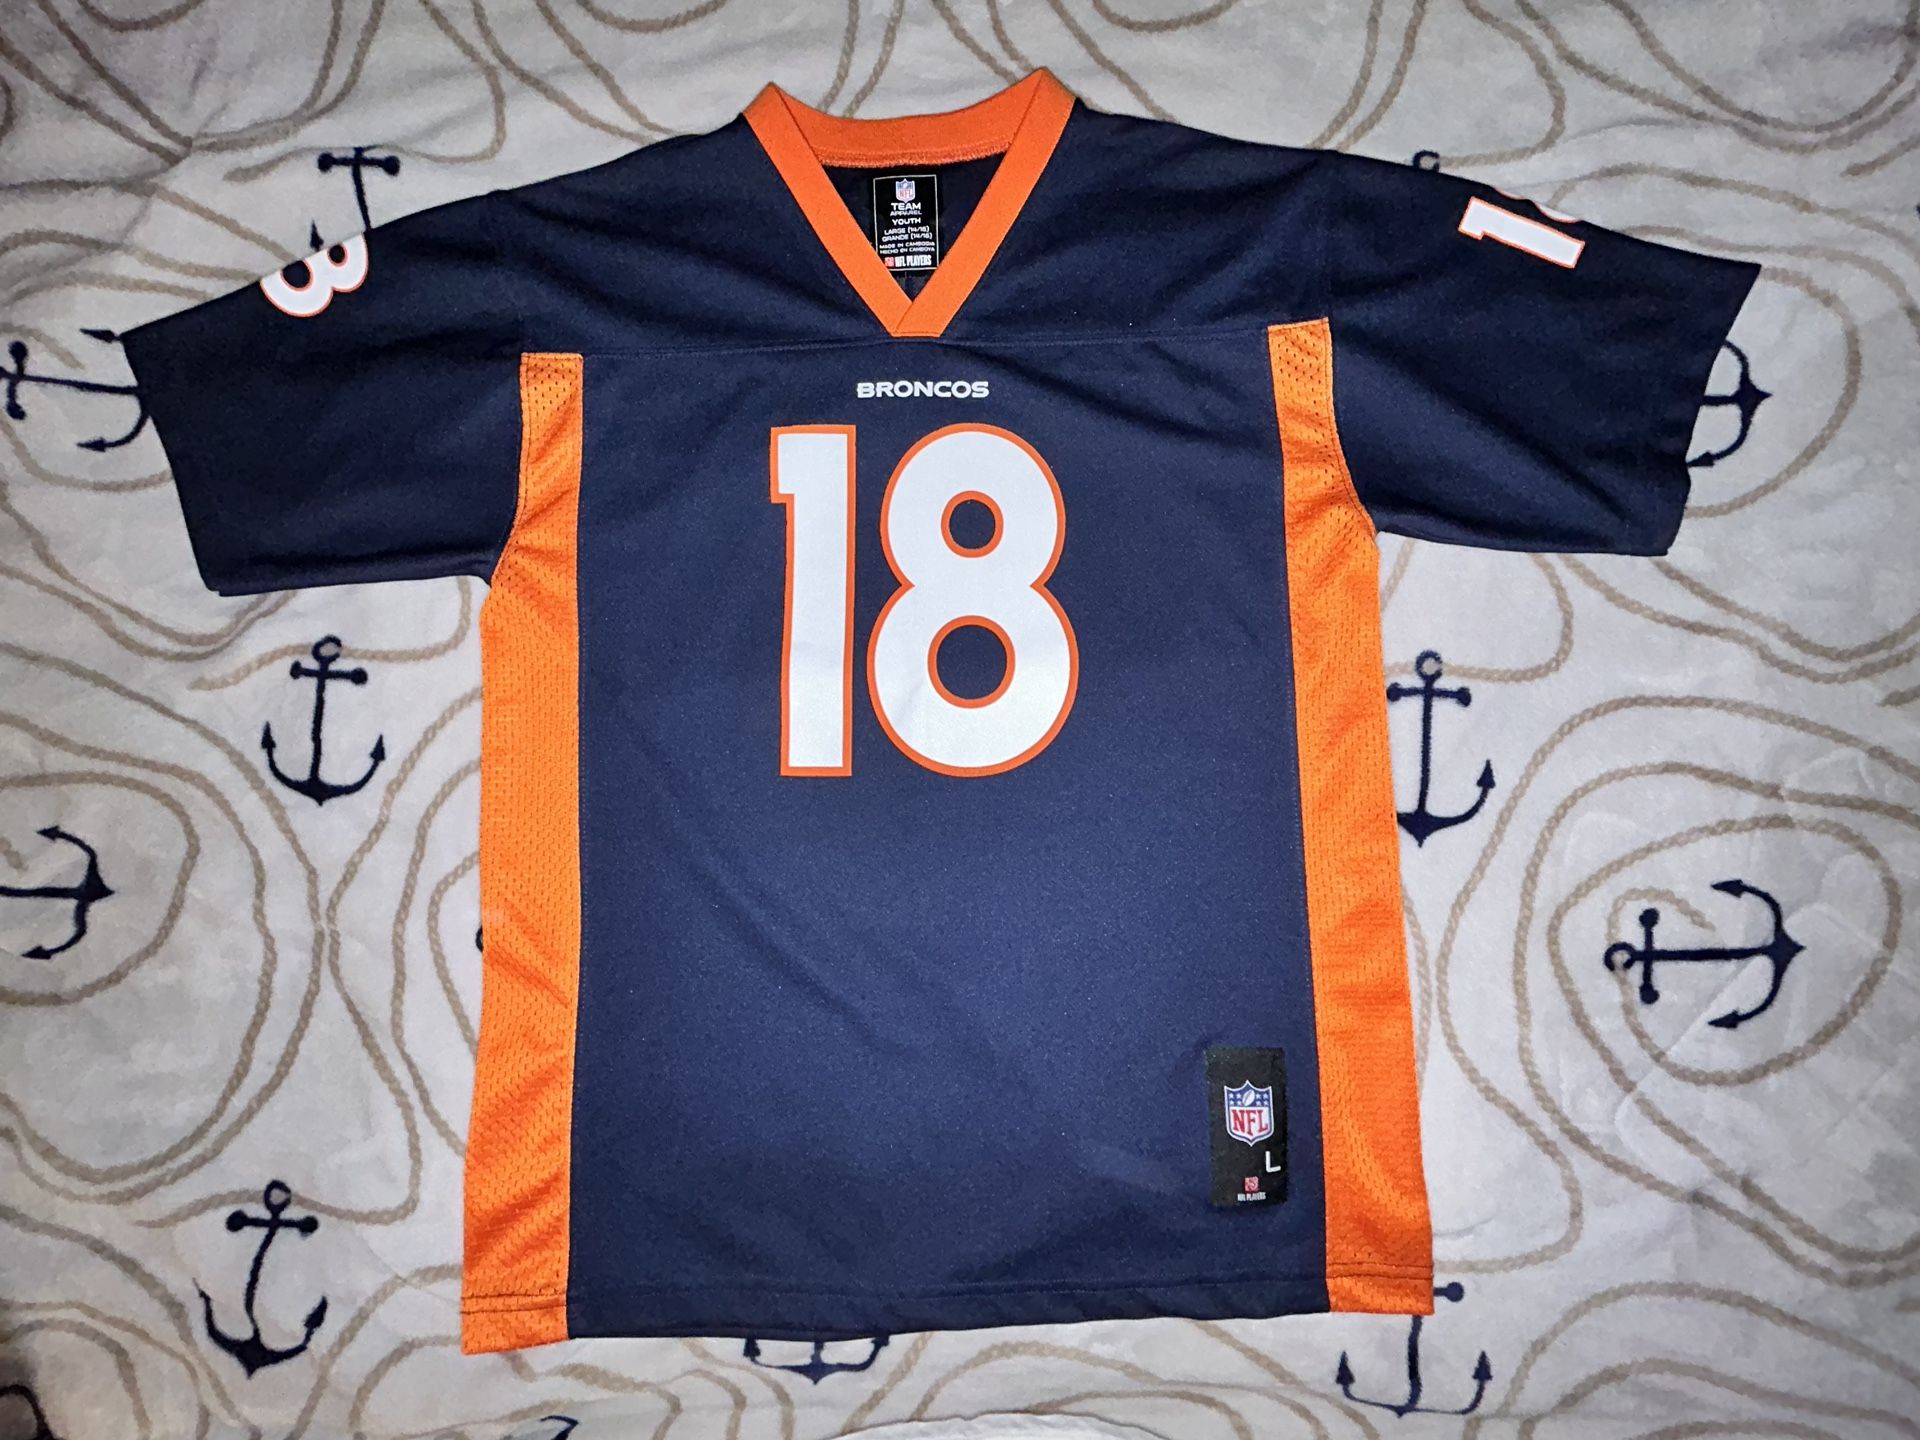 Broncos Manning Jersey